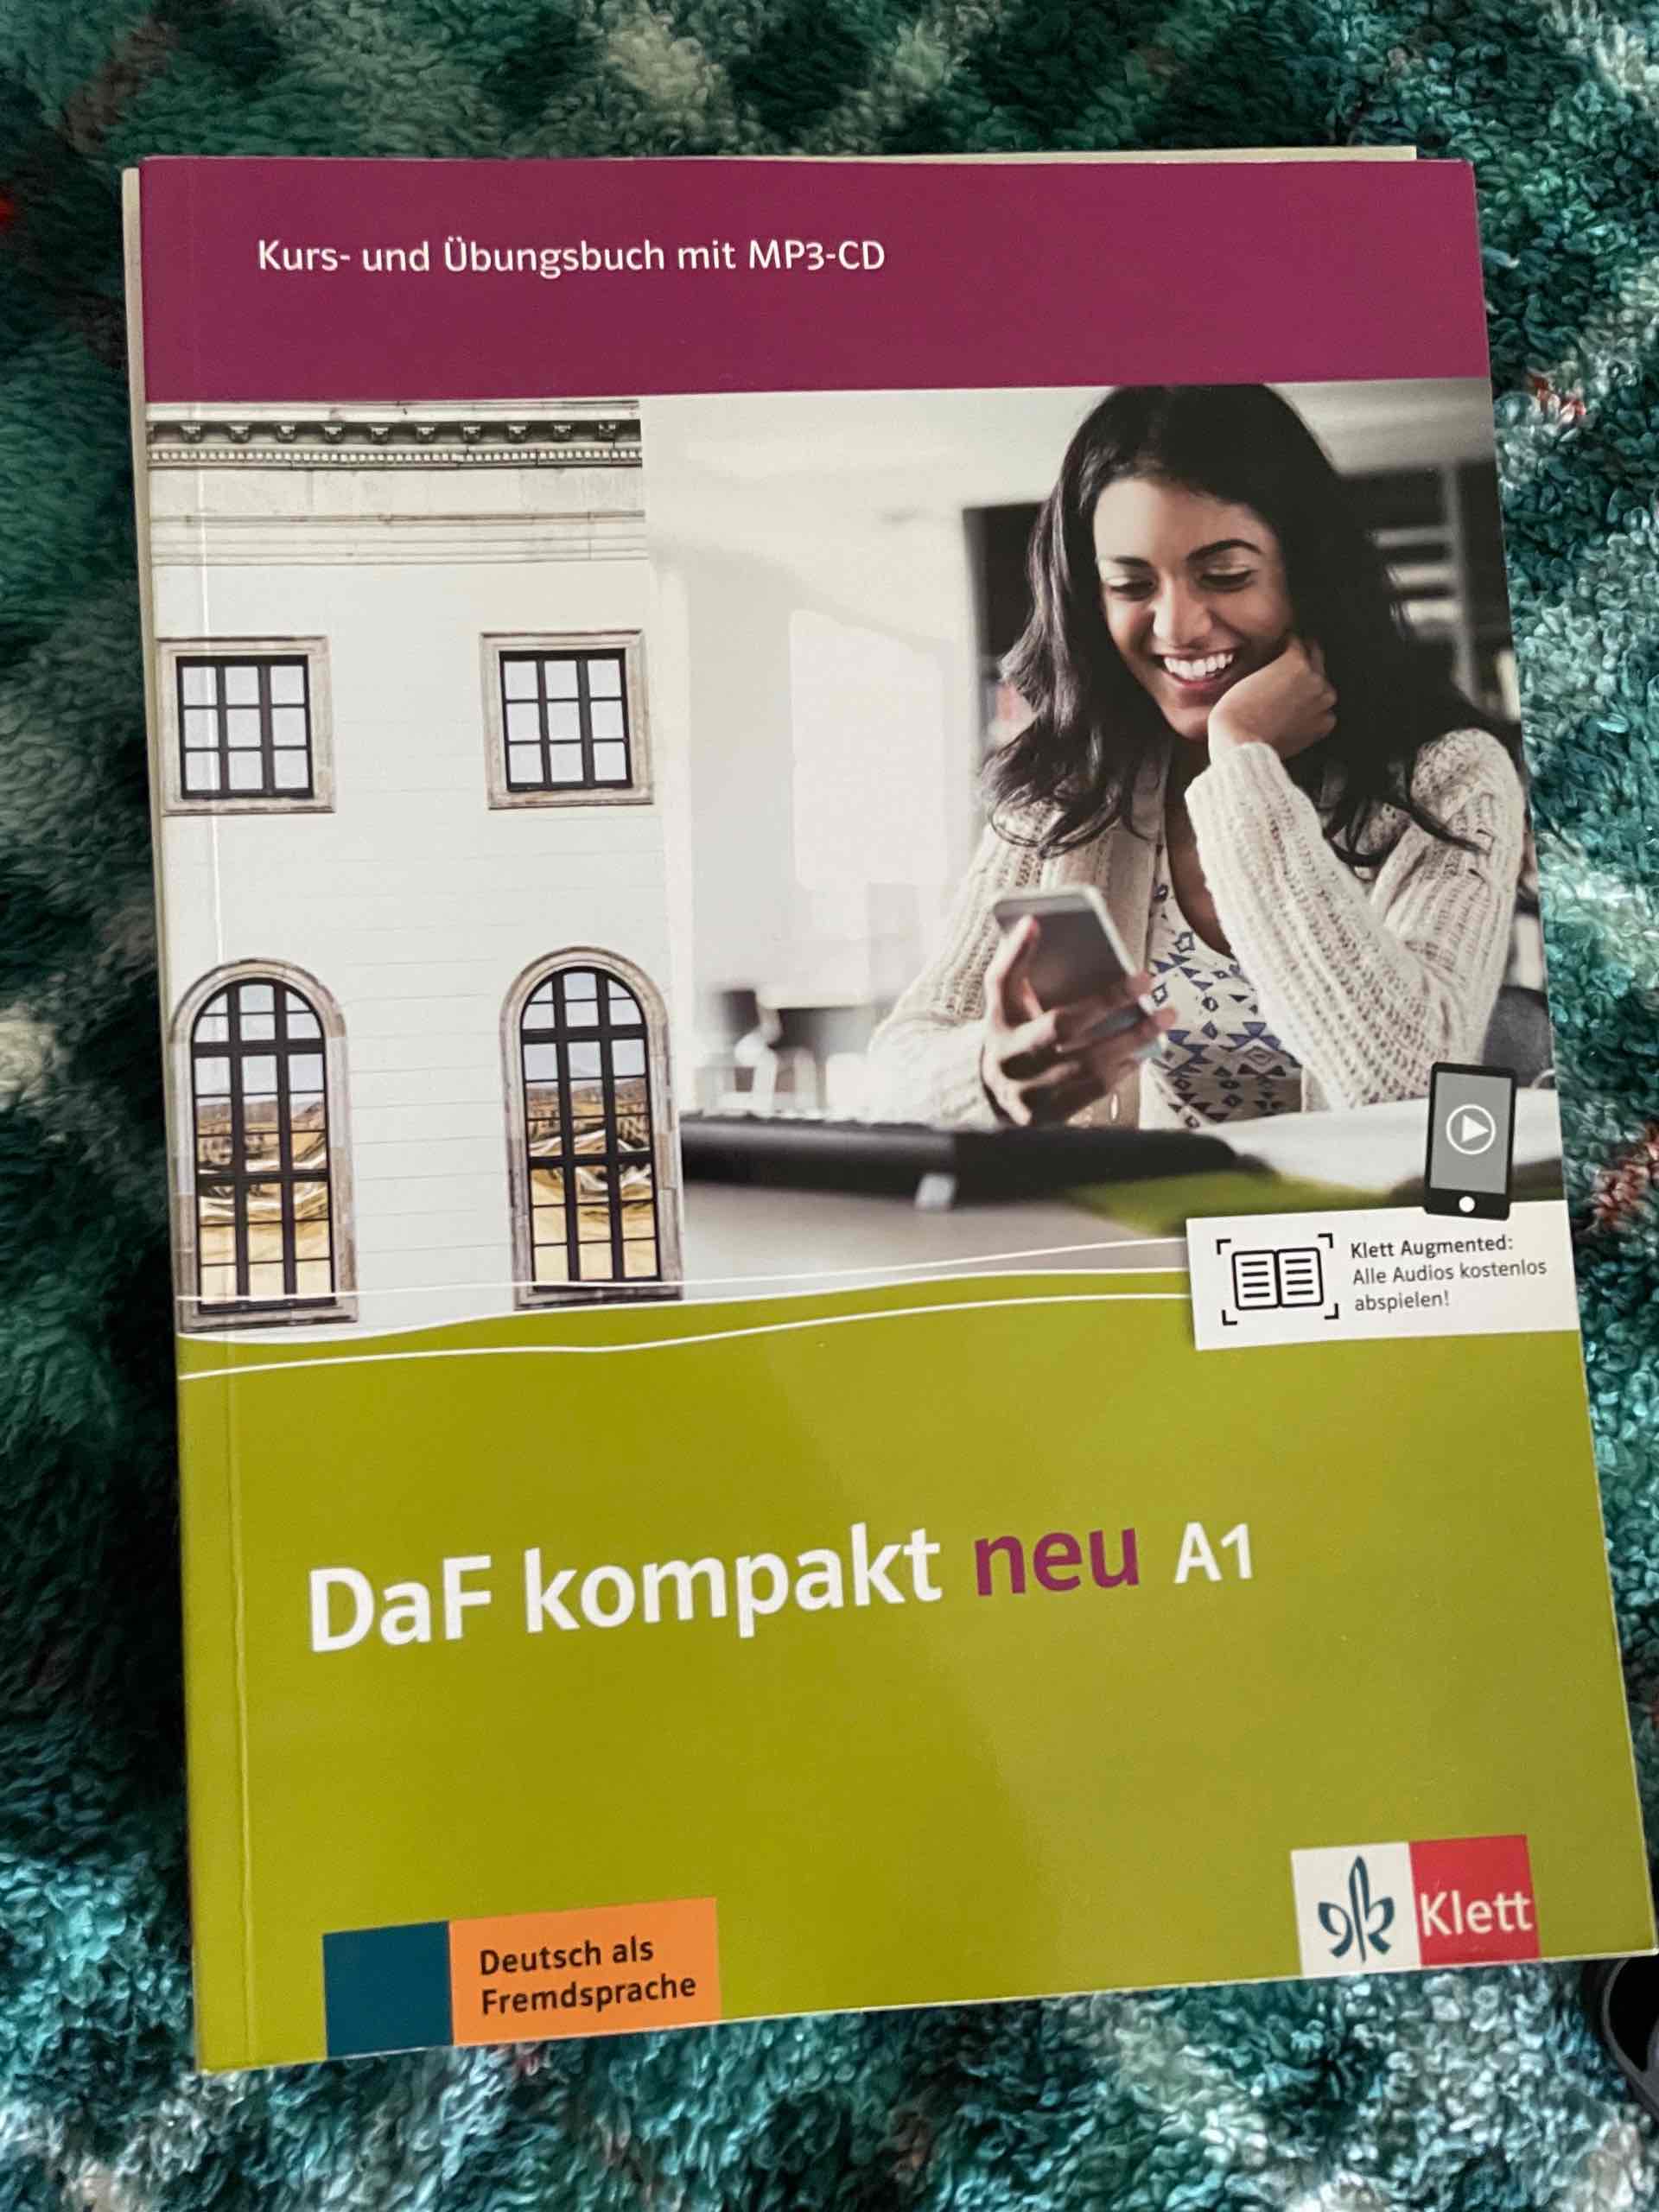 Daf Kompakt Neu A1 - Kurs und Ubungsbuch + CD Mp3